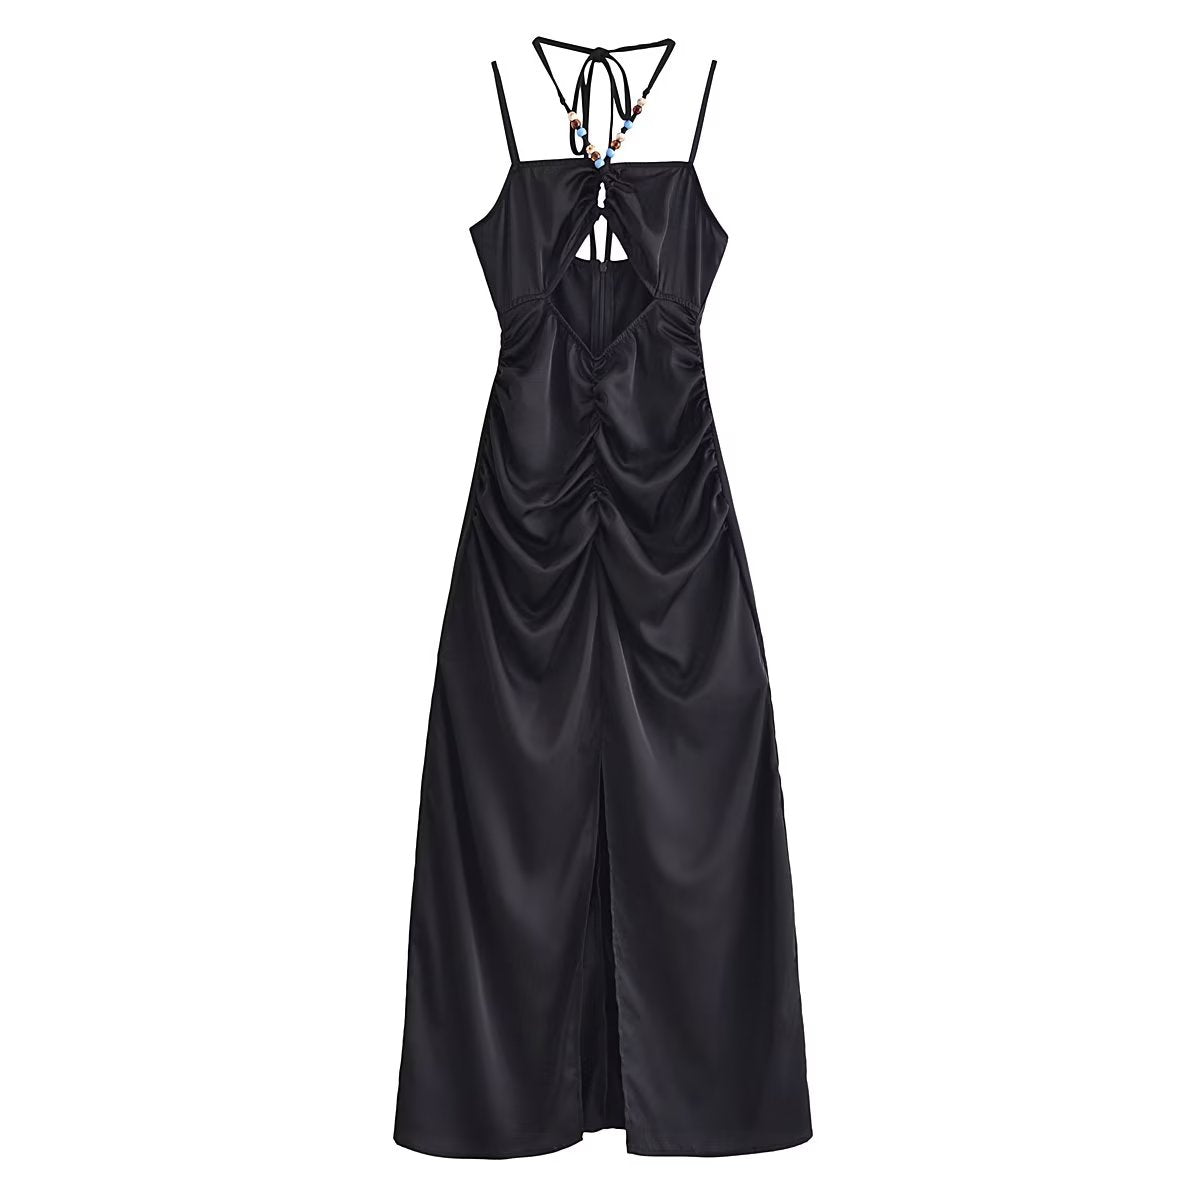 Niche Design Camisole Dress: Stylish Slim Fit Sheath for Summer Women & Girls - Ootddress